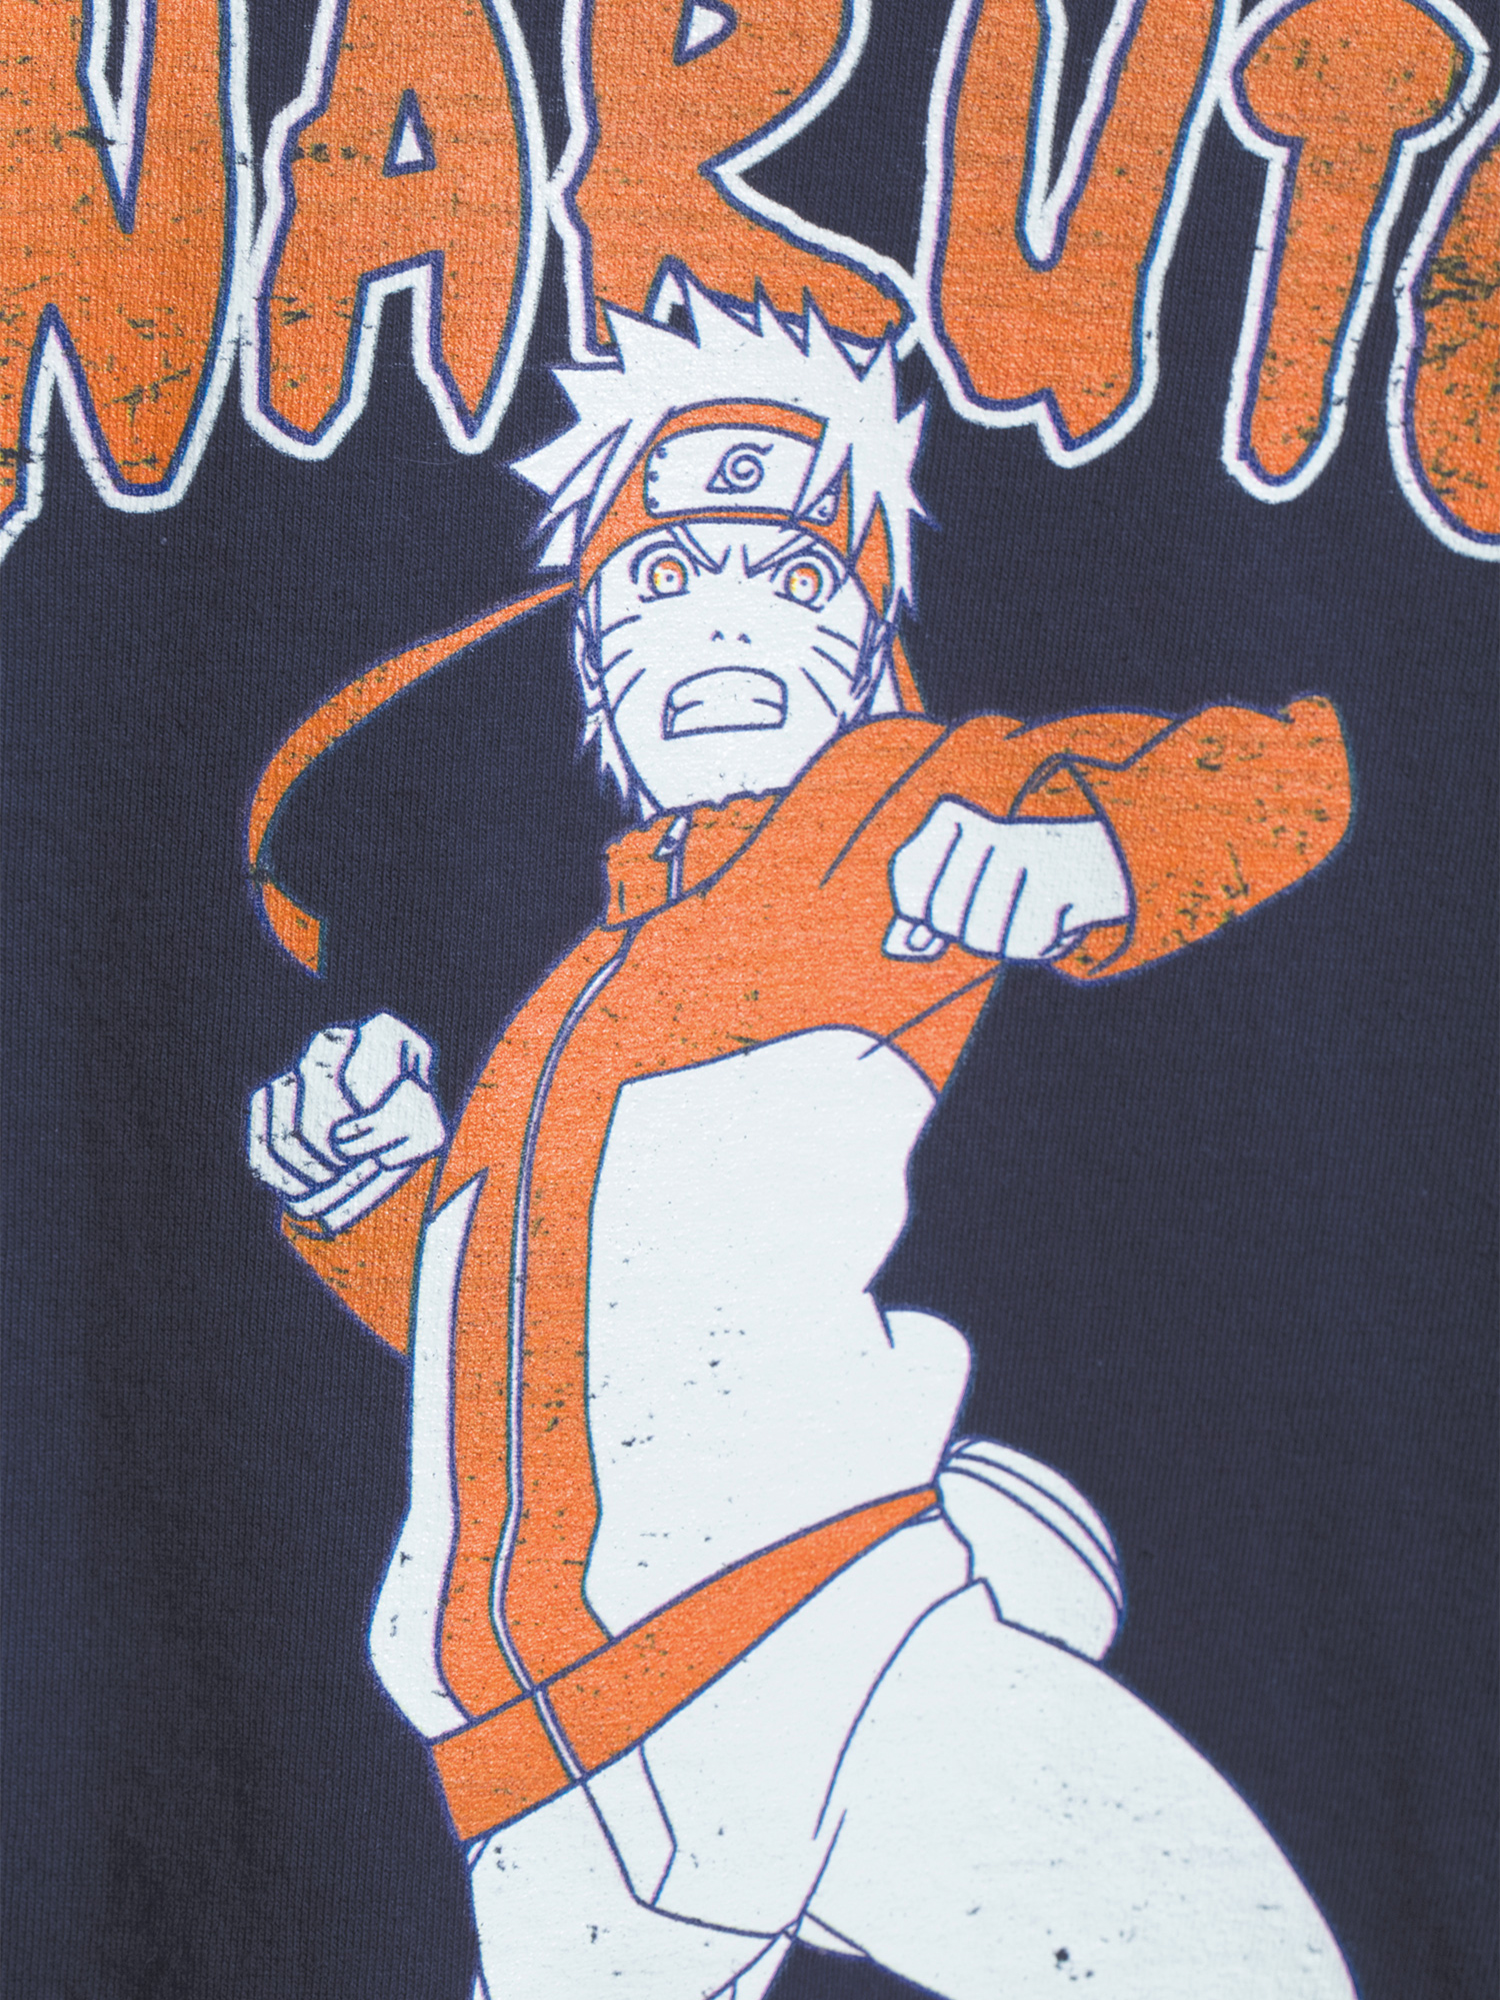 Naruto Men's & Big Men's Uzumaki Anime Graphic Tees Shirts, 2-Pack, Sizes S-3XL, Naruto Anime Mens T-Shirts - image 3 of 8